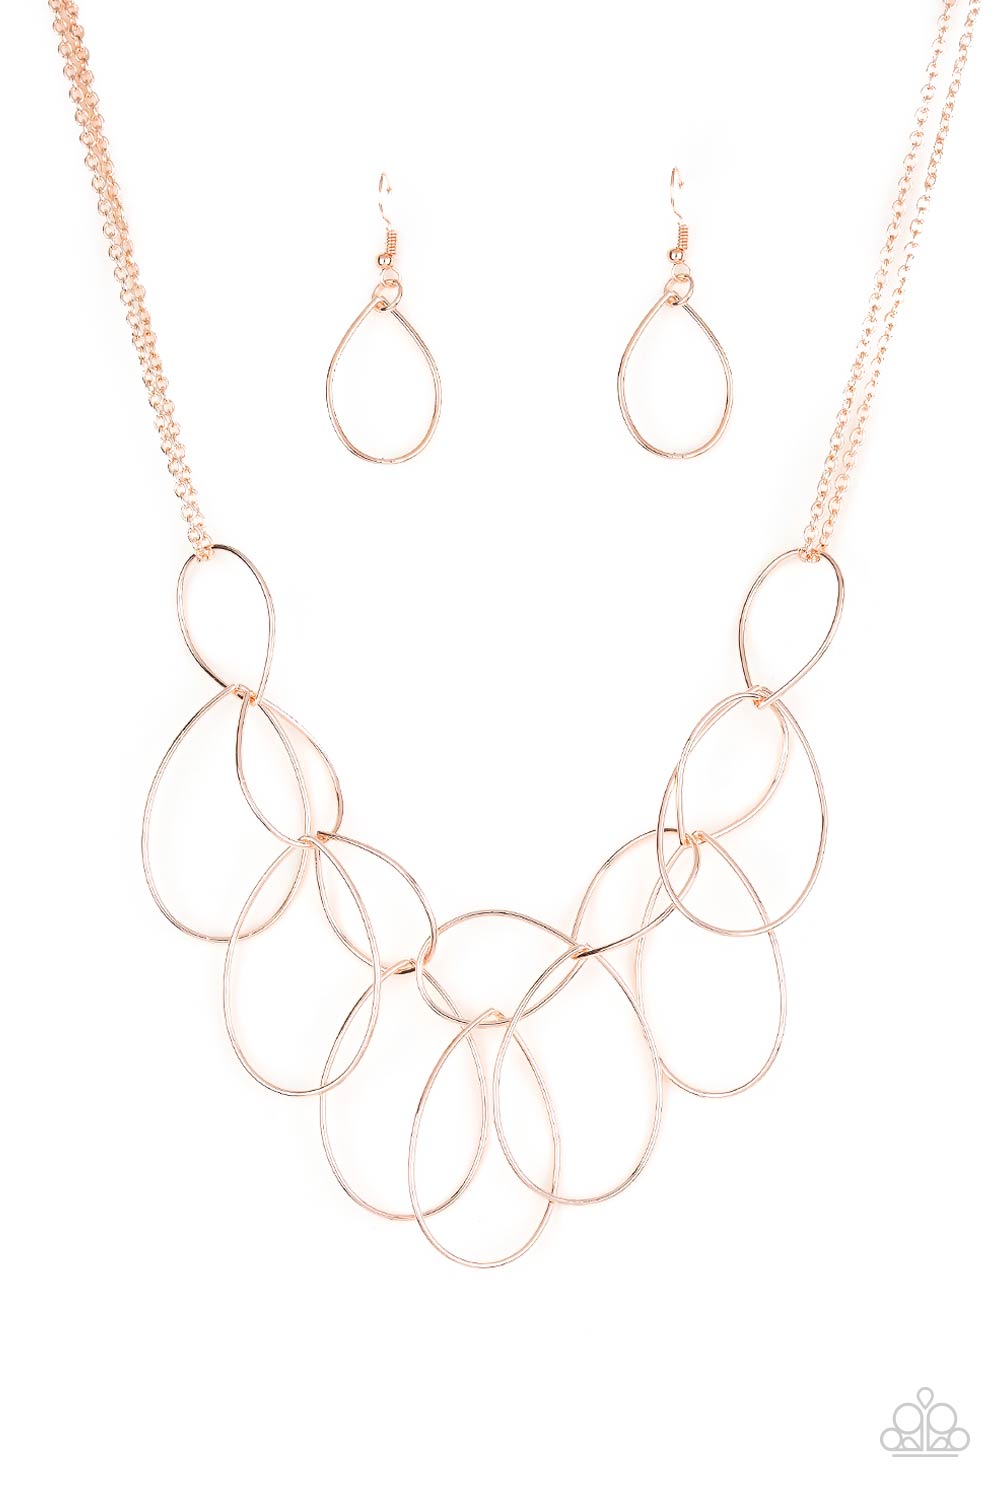 Top-TEAR Fashion - Rose Gold Necklace Set - Princess Glam Shop